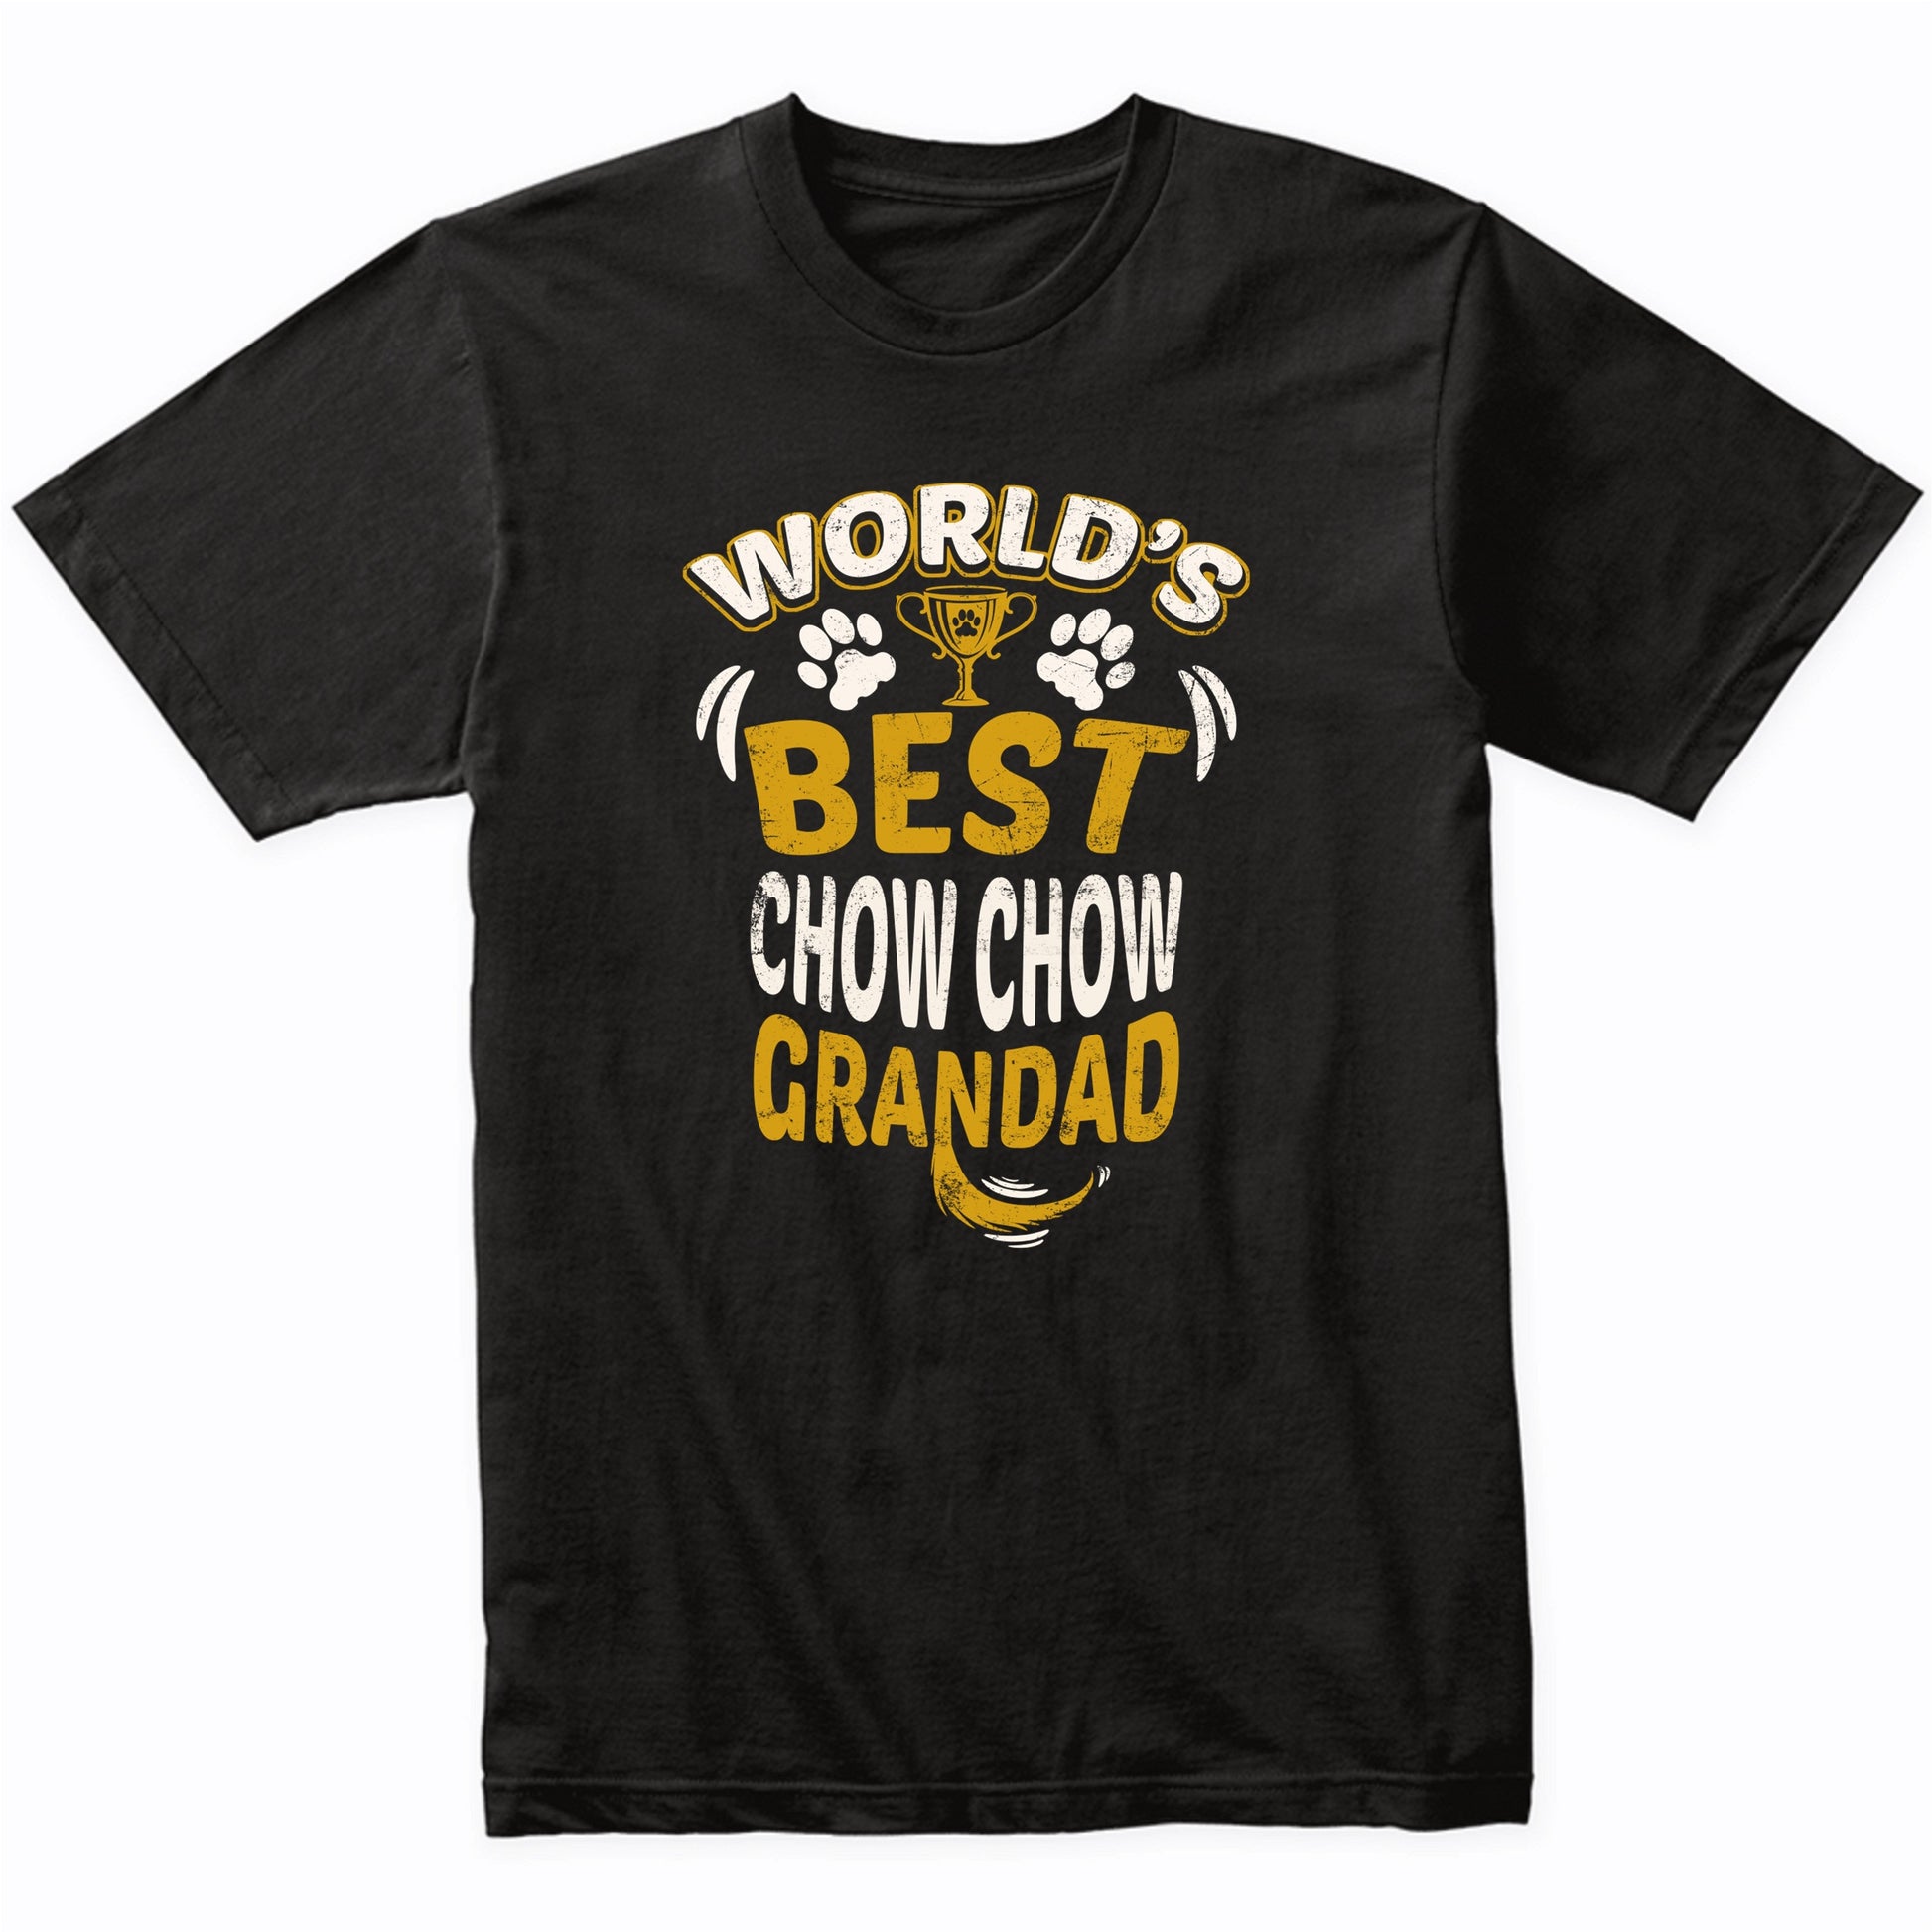 World's Best Chow Chow Grandad Graphic T-Shirt